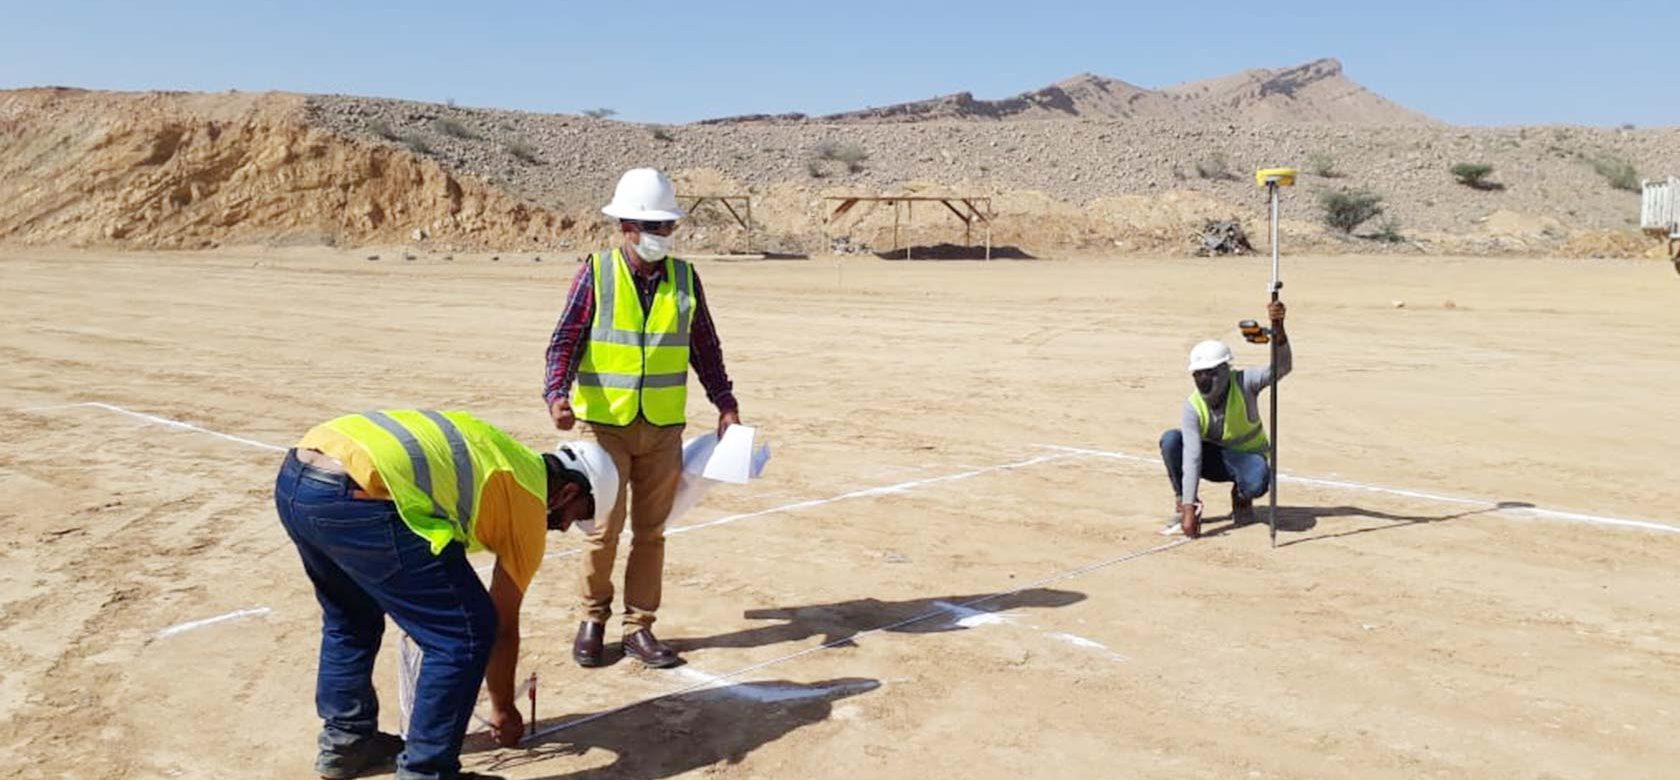 Plot Marking during Survey work in Oman by Hadi Engineering